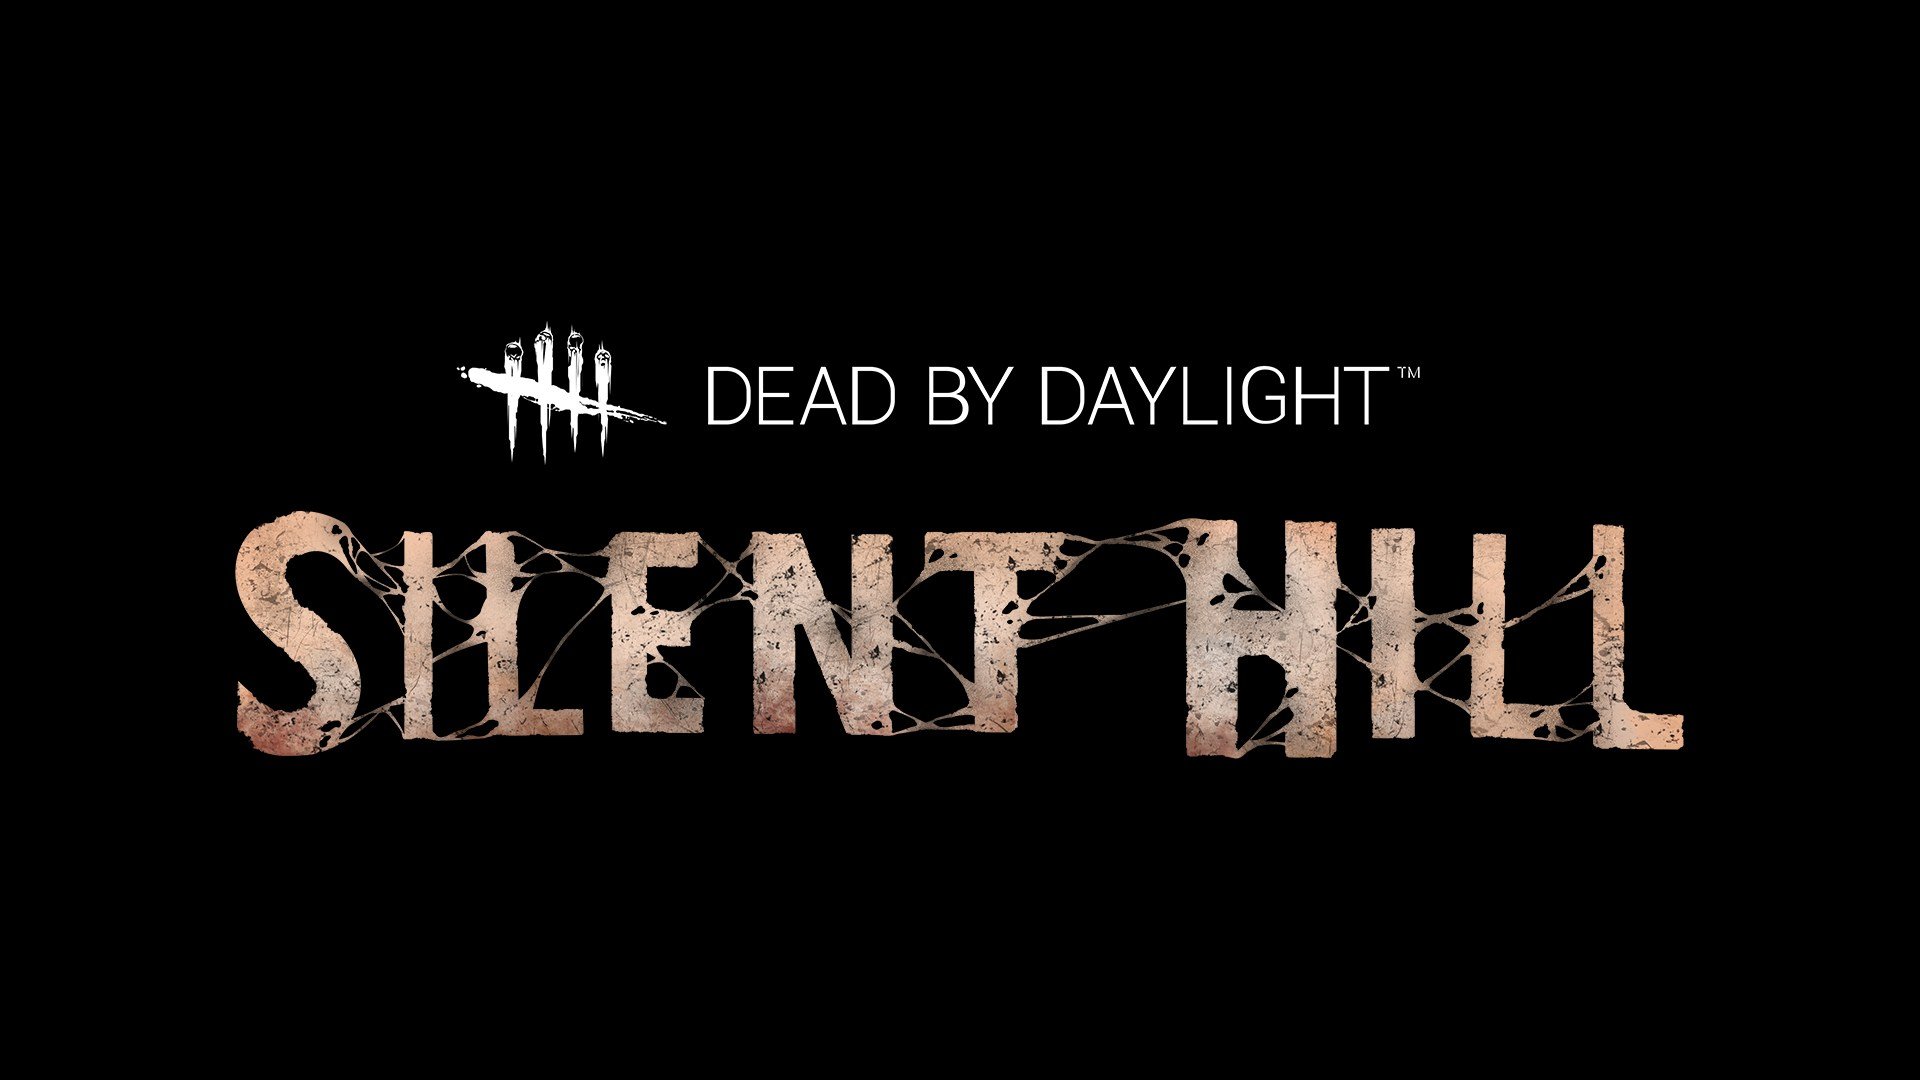 Dead by Daylight: Silent Hill